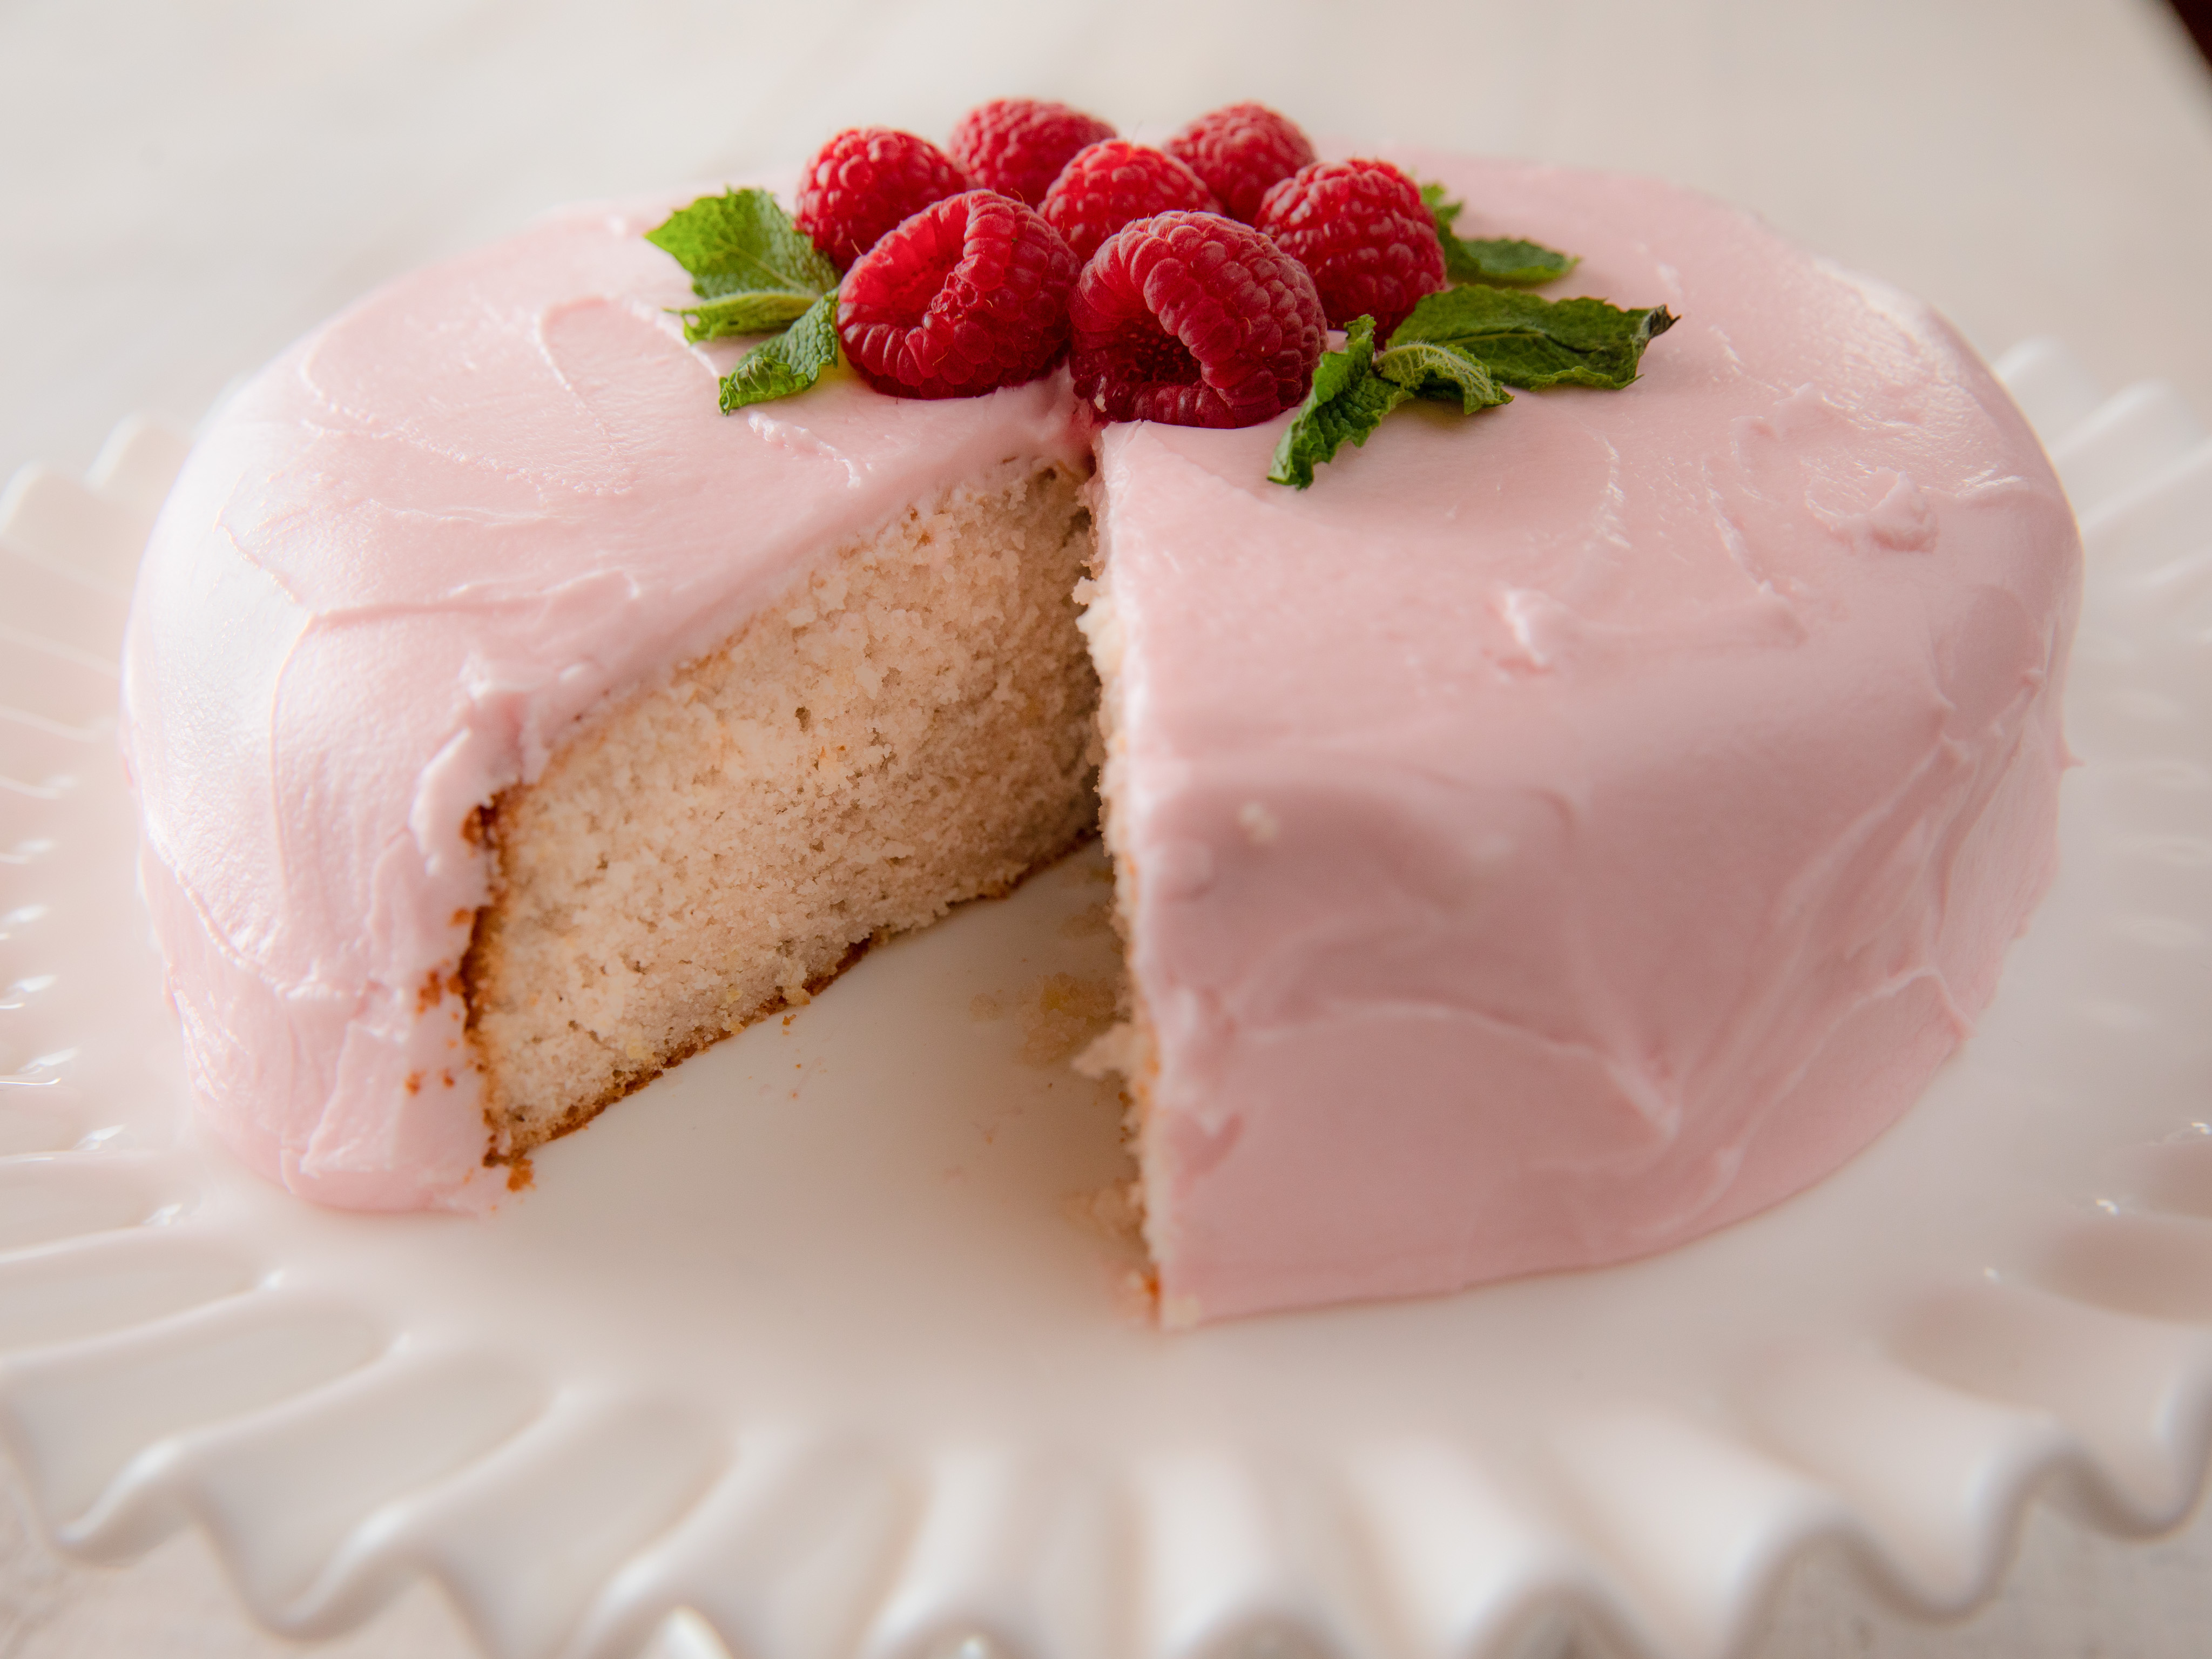 https://www.foodnetwork.com/content/dam/images/food/fullset/2019/1/29/0/WU2108_Lemon-and-Raspberry-Cream-Cake_s4x3.jpg